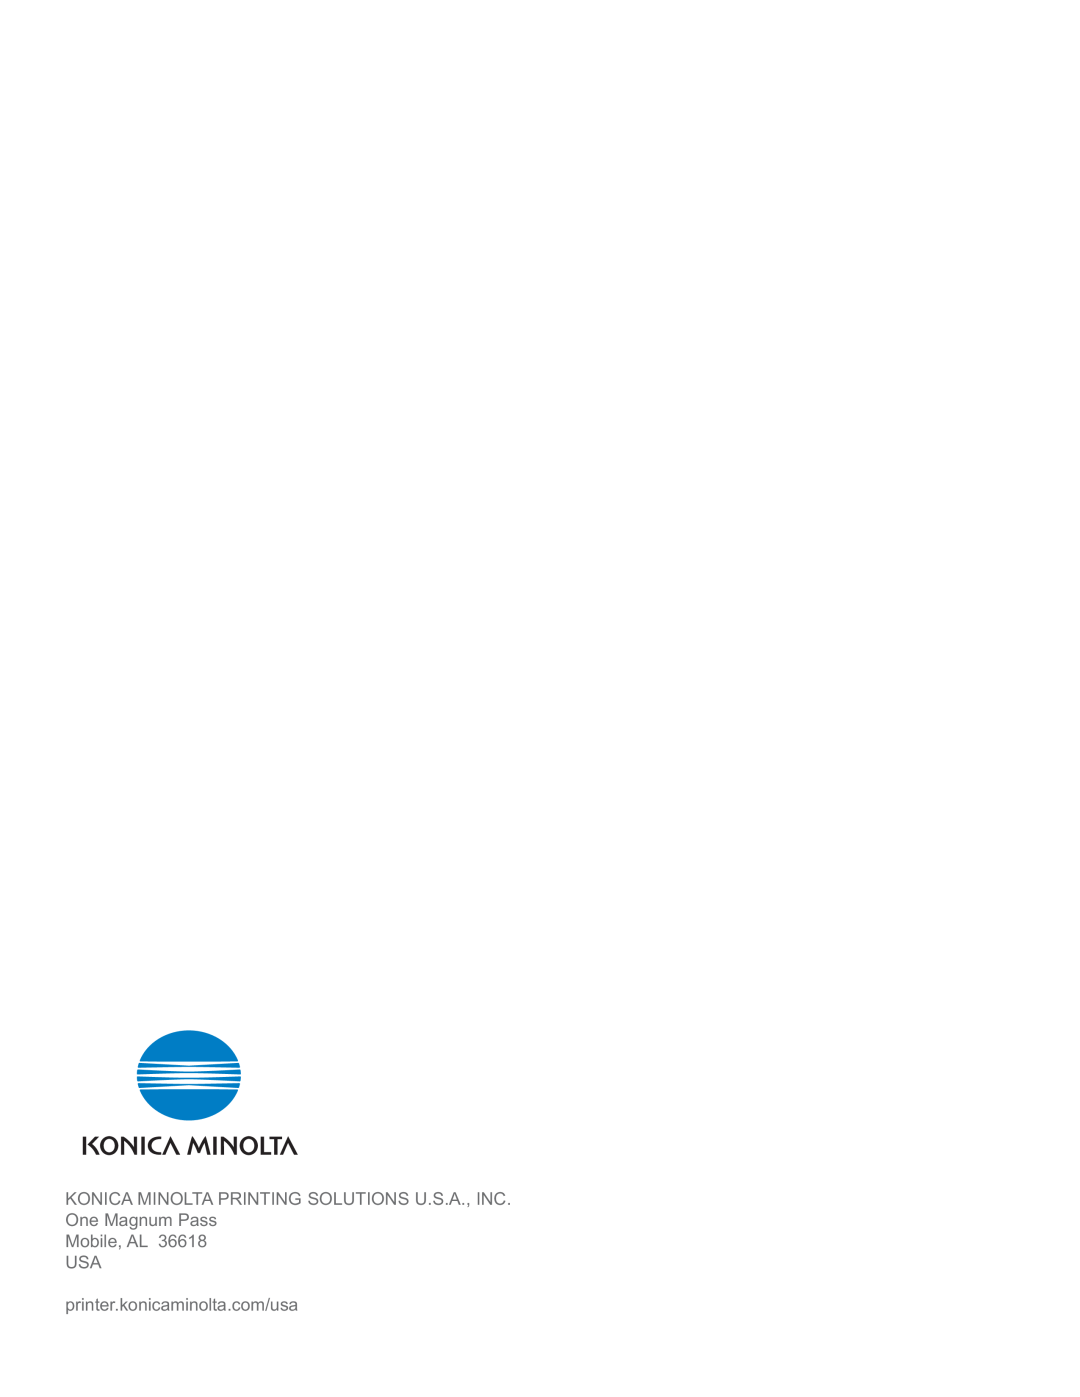 Konica Minolta 7450 manual Konica Minolta Printing Solutions U.S.A., Inc, One Magnum Pass Mobile, AL USA 